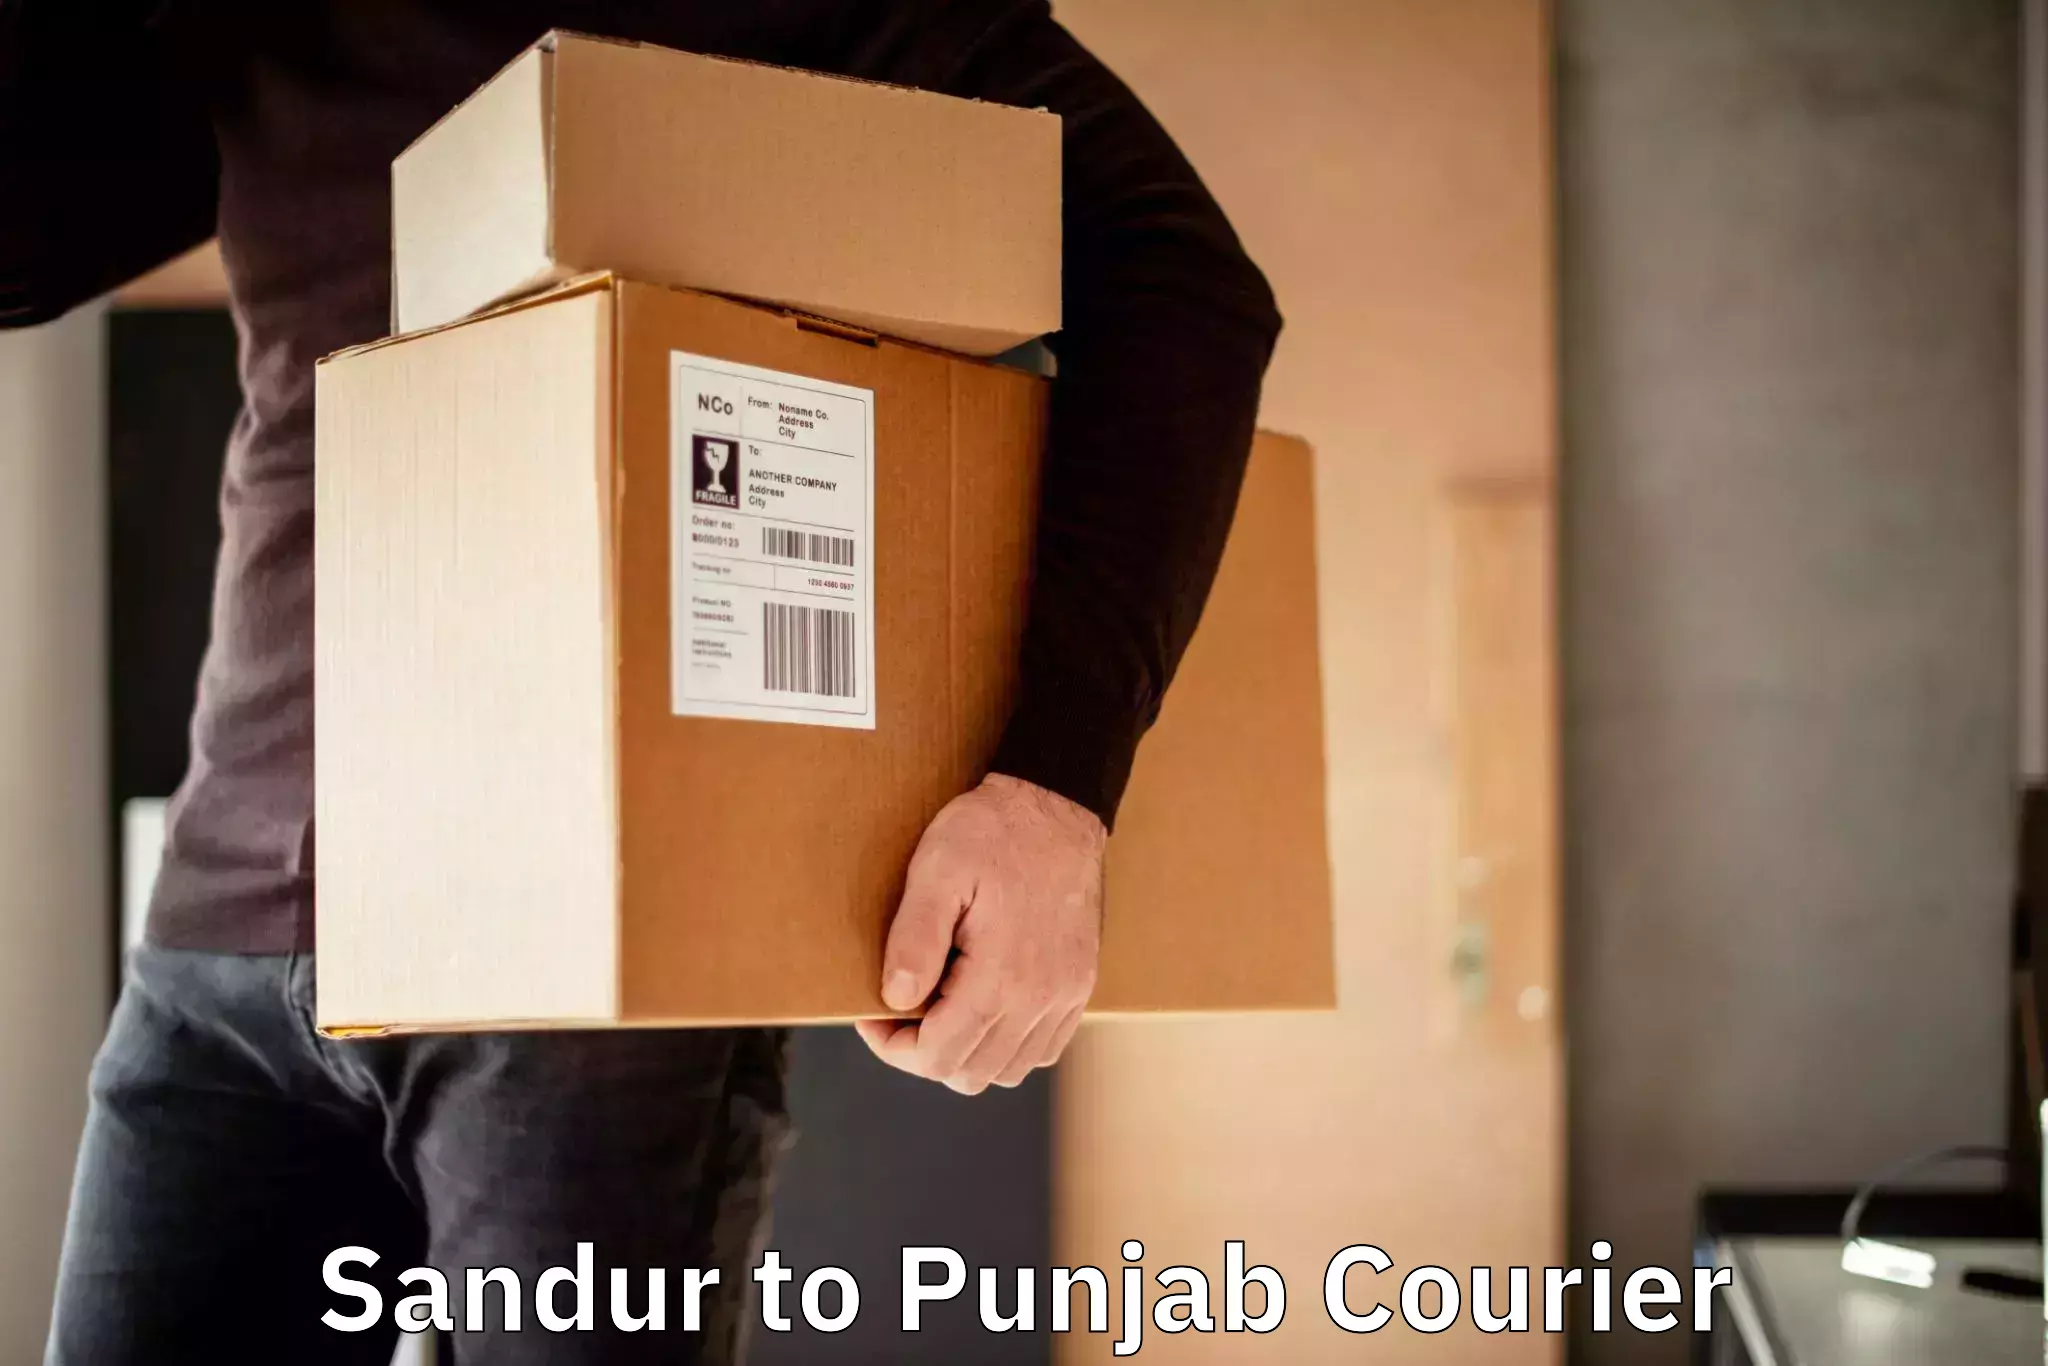 Next-generation courier services Sandur to Punjab